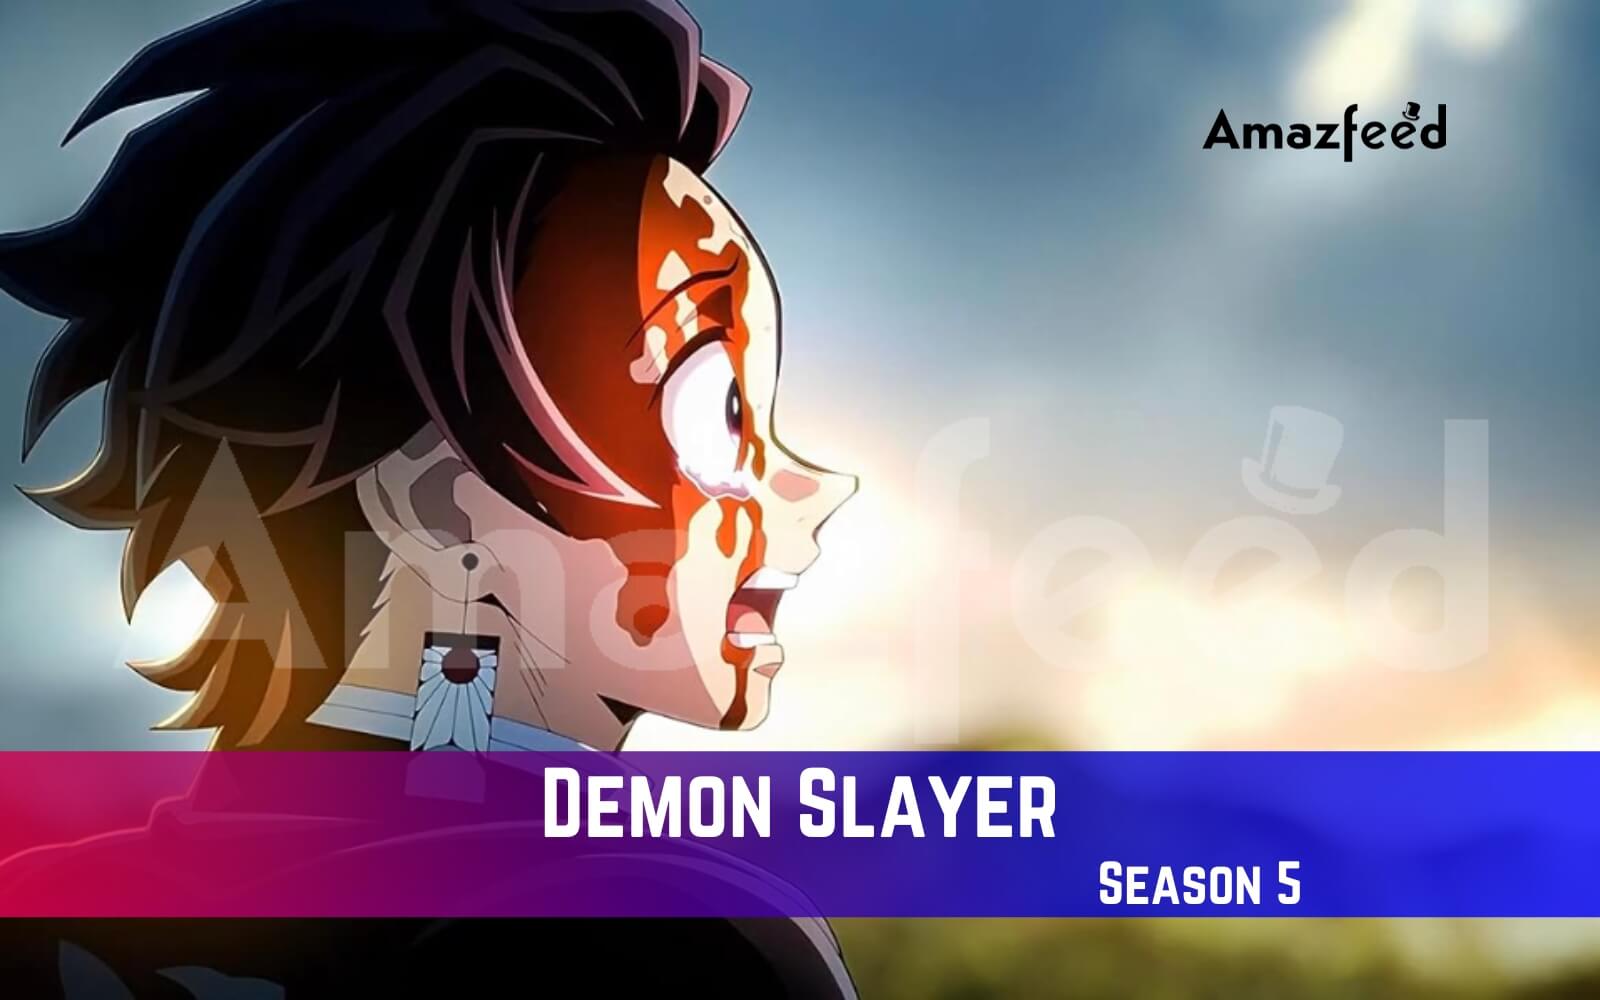 Demon Slayer will release multiple movies instead of Season 5